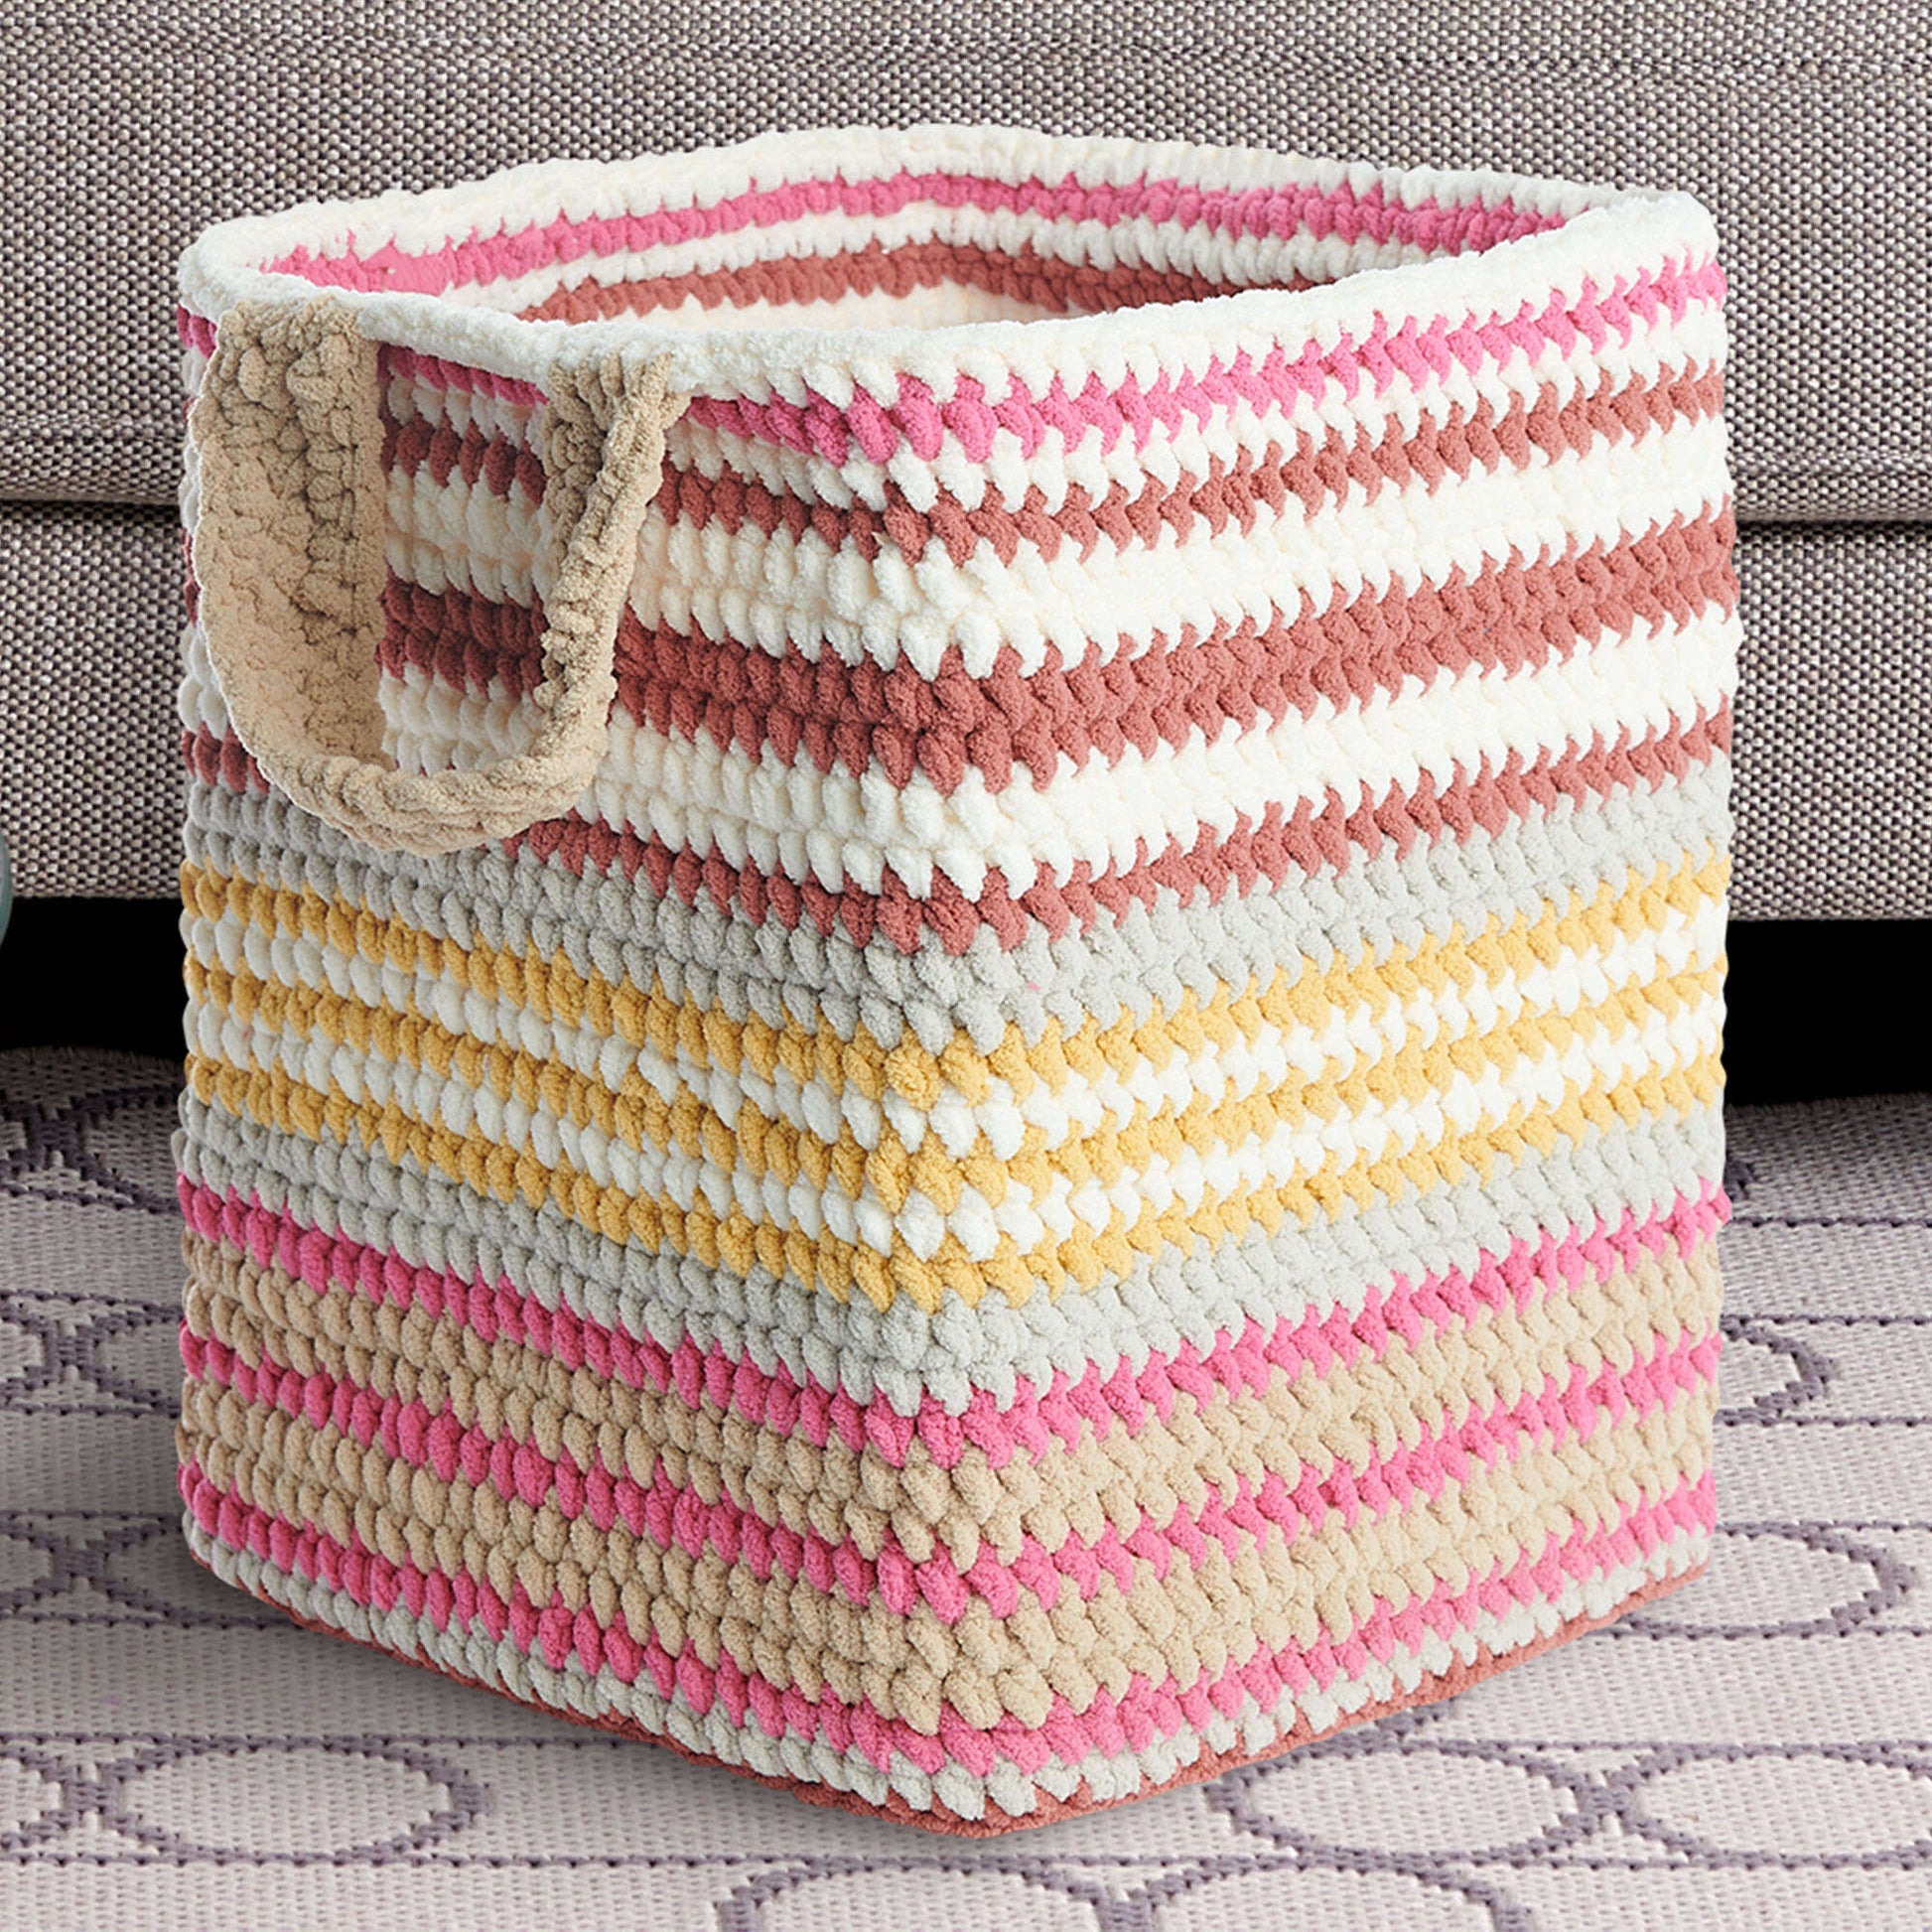 Free Bernat Crochet Boxy Striped Basket Pattern